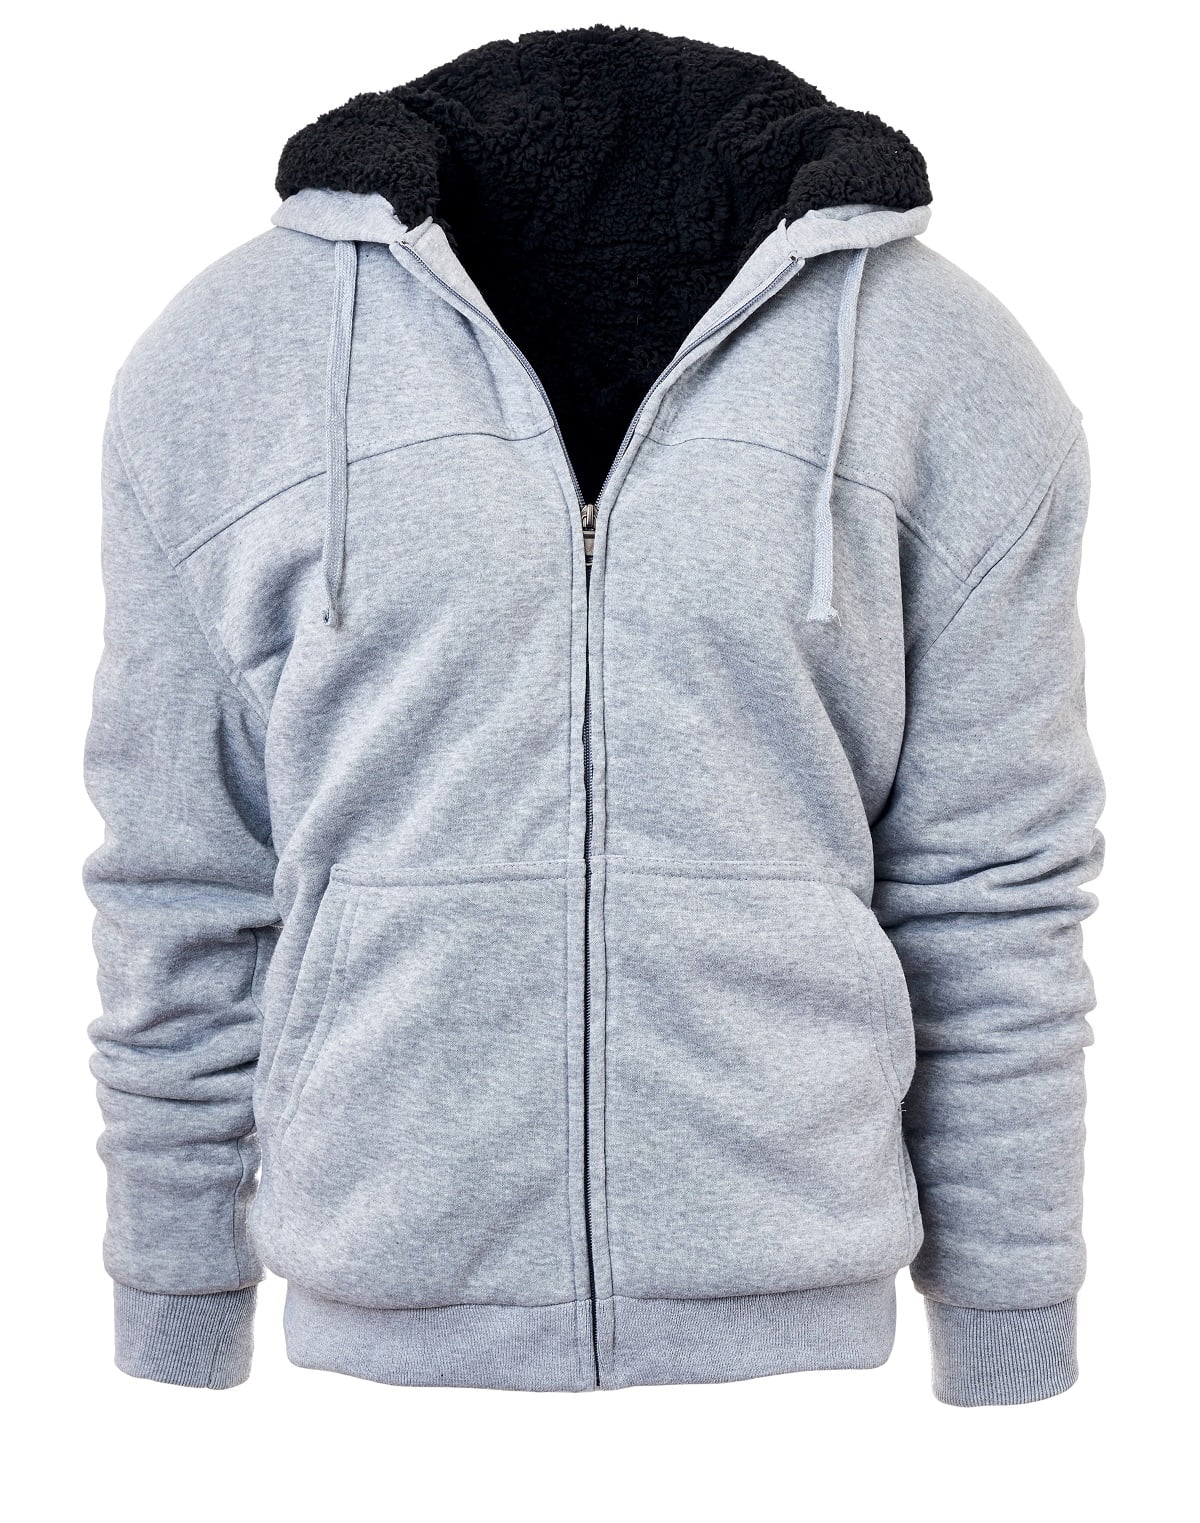 Men's Fleece Jackets Sherpa Lined Sweatshirt Heavyweight Thick Zip Up Hoodie with Zipper Pockets